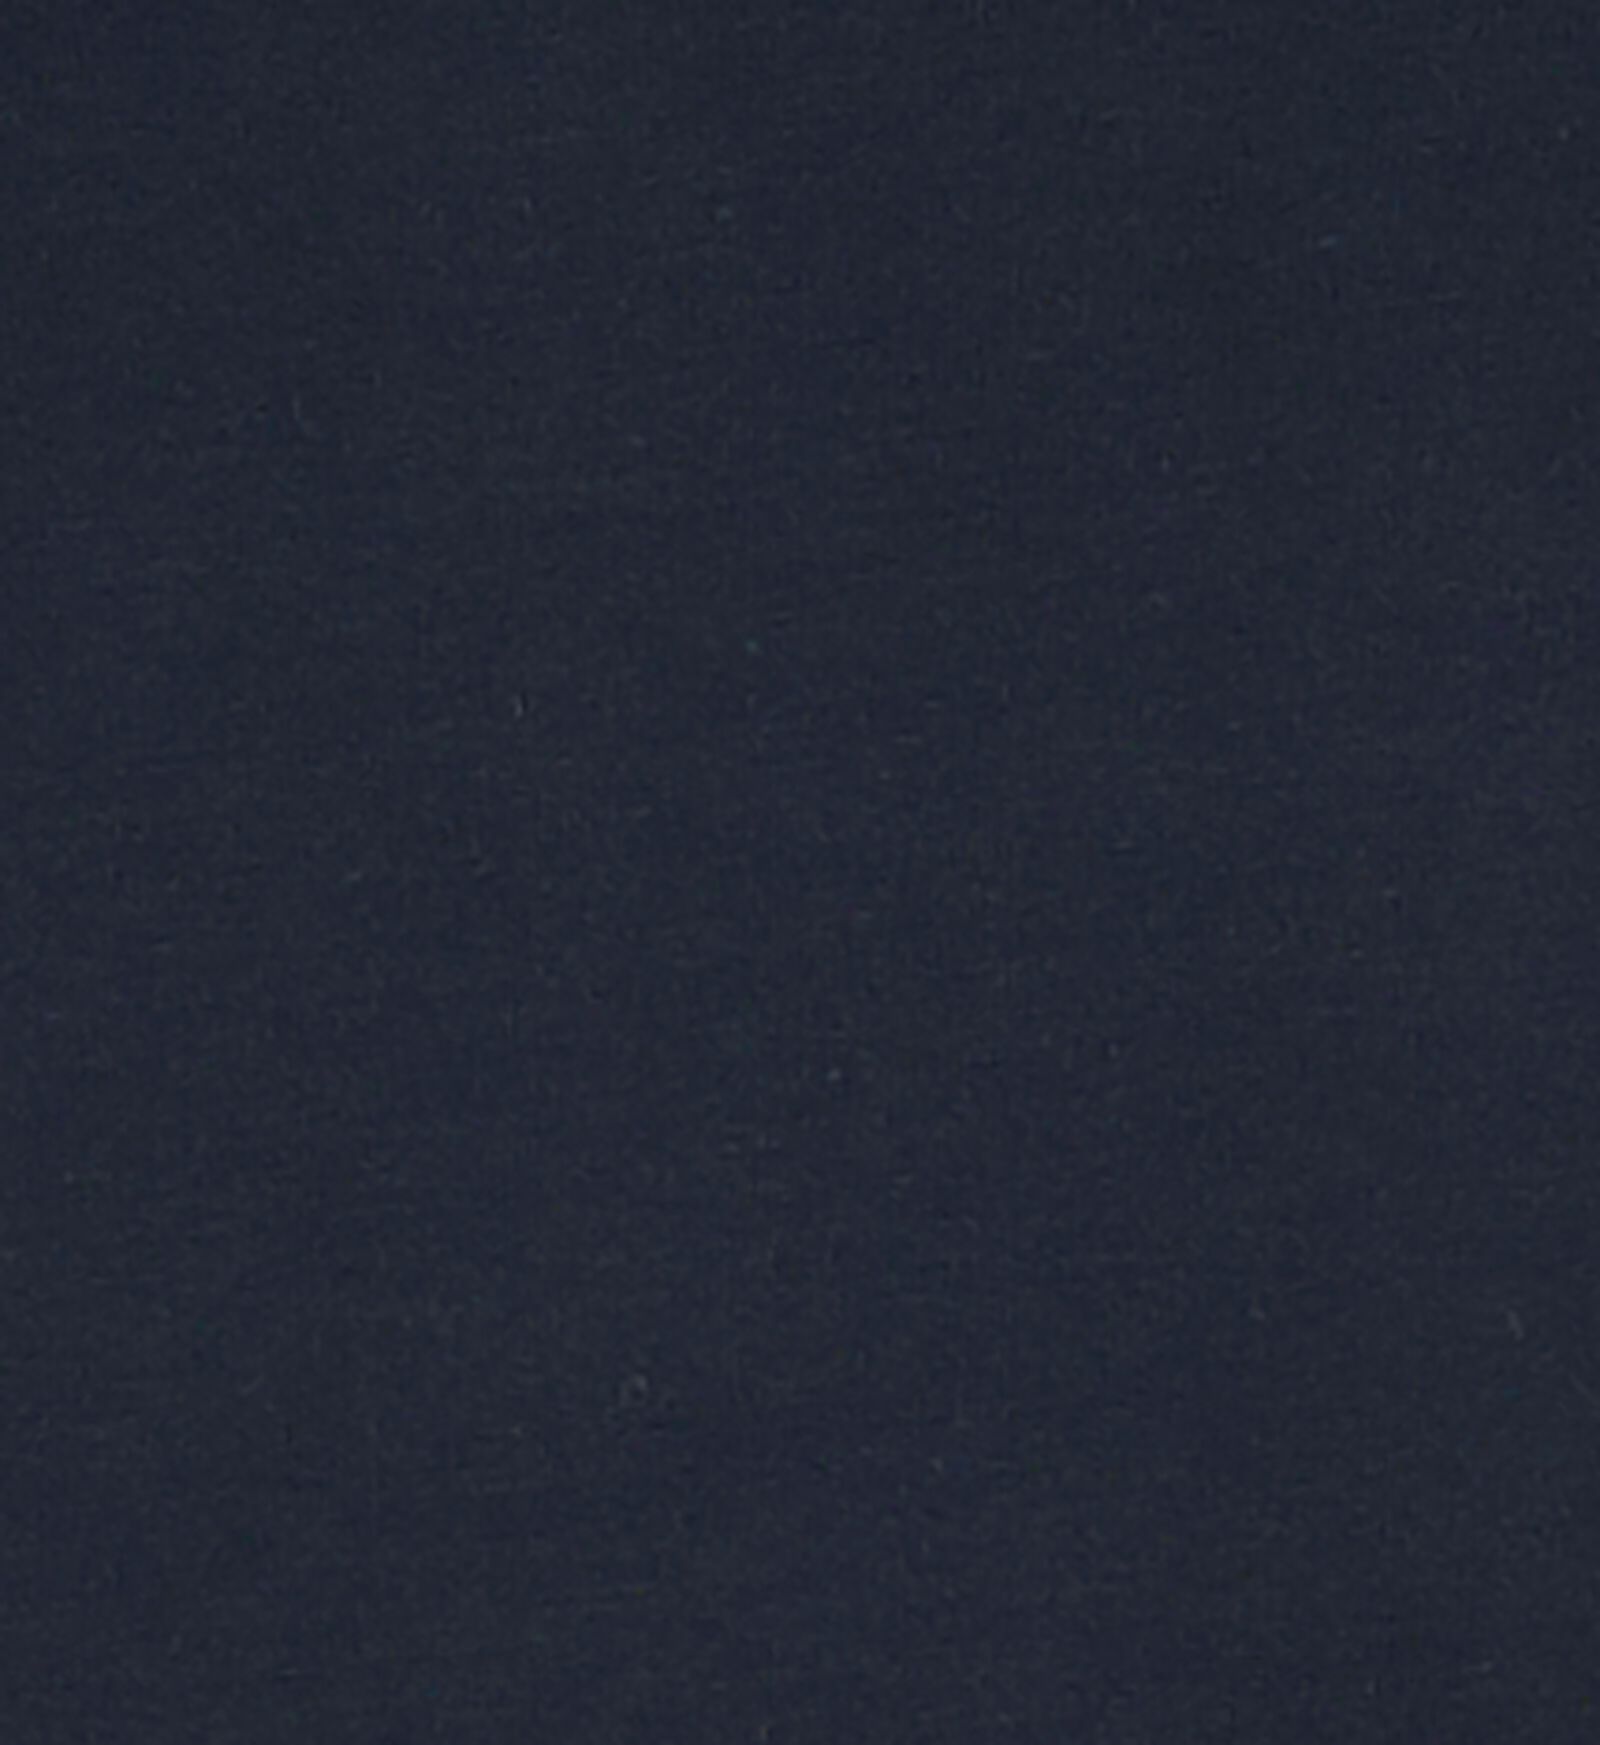 Damen-Hemd dunkelblau XXL - 19604036 - HEMA